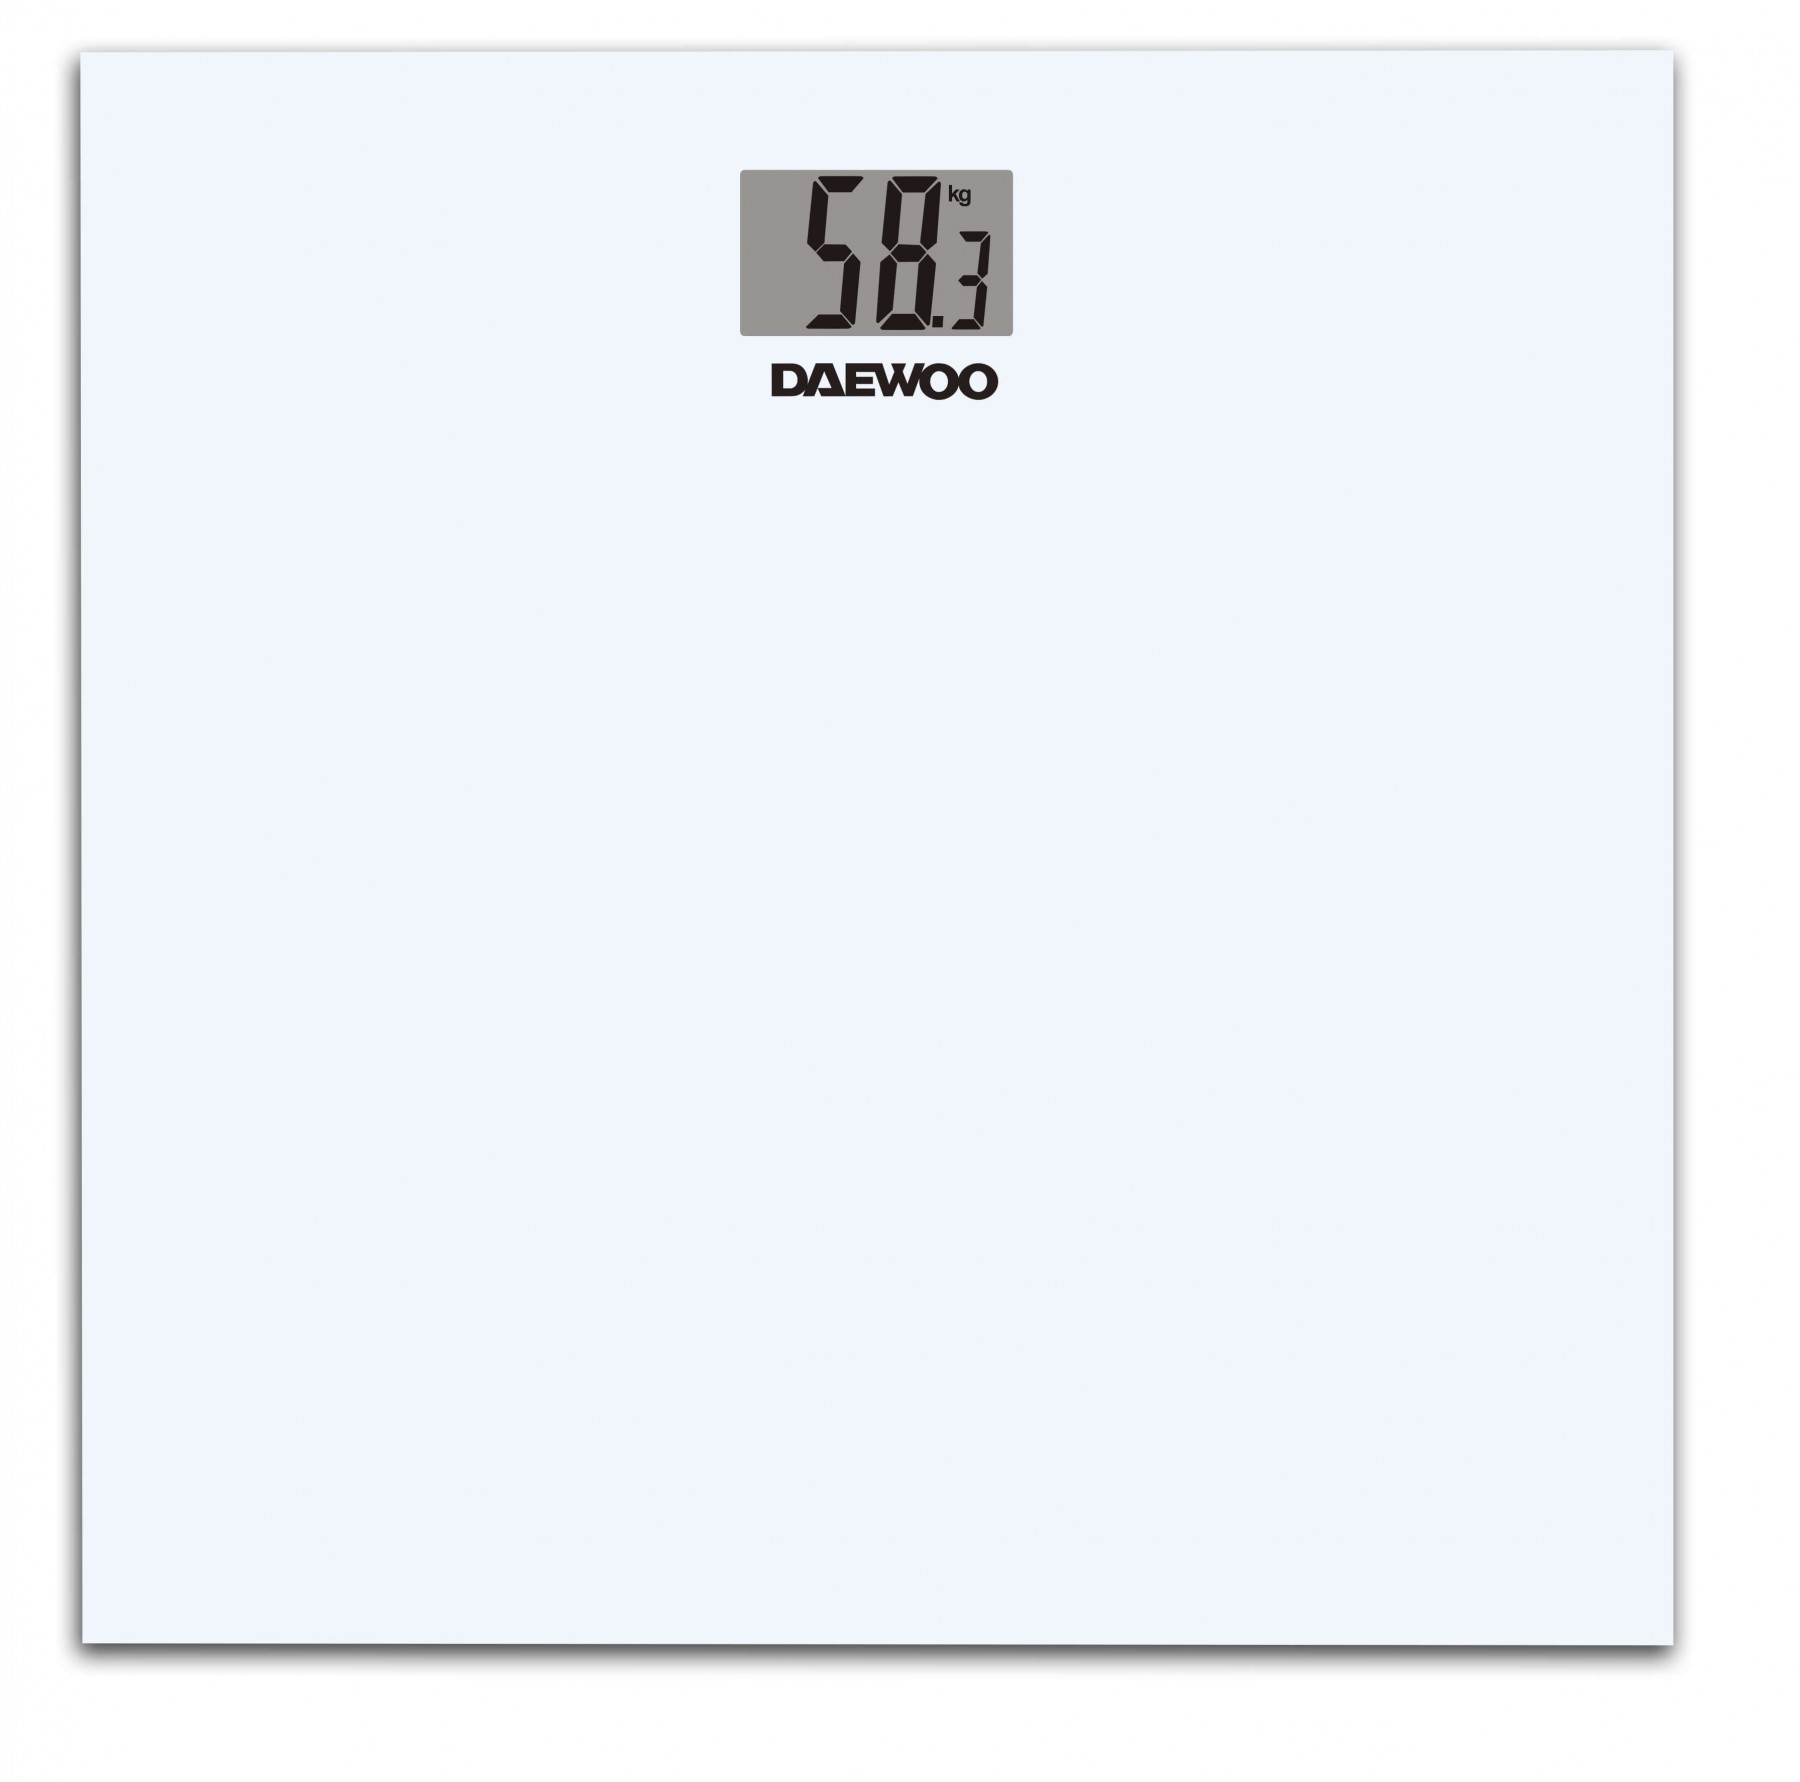 Daewoo Digital Bathroom Electronic Weight Scale - HM52